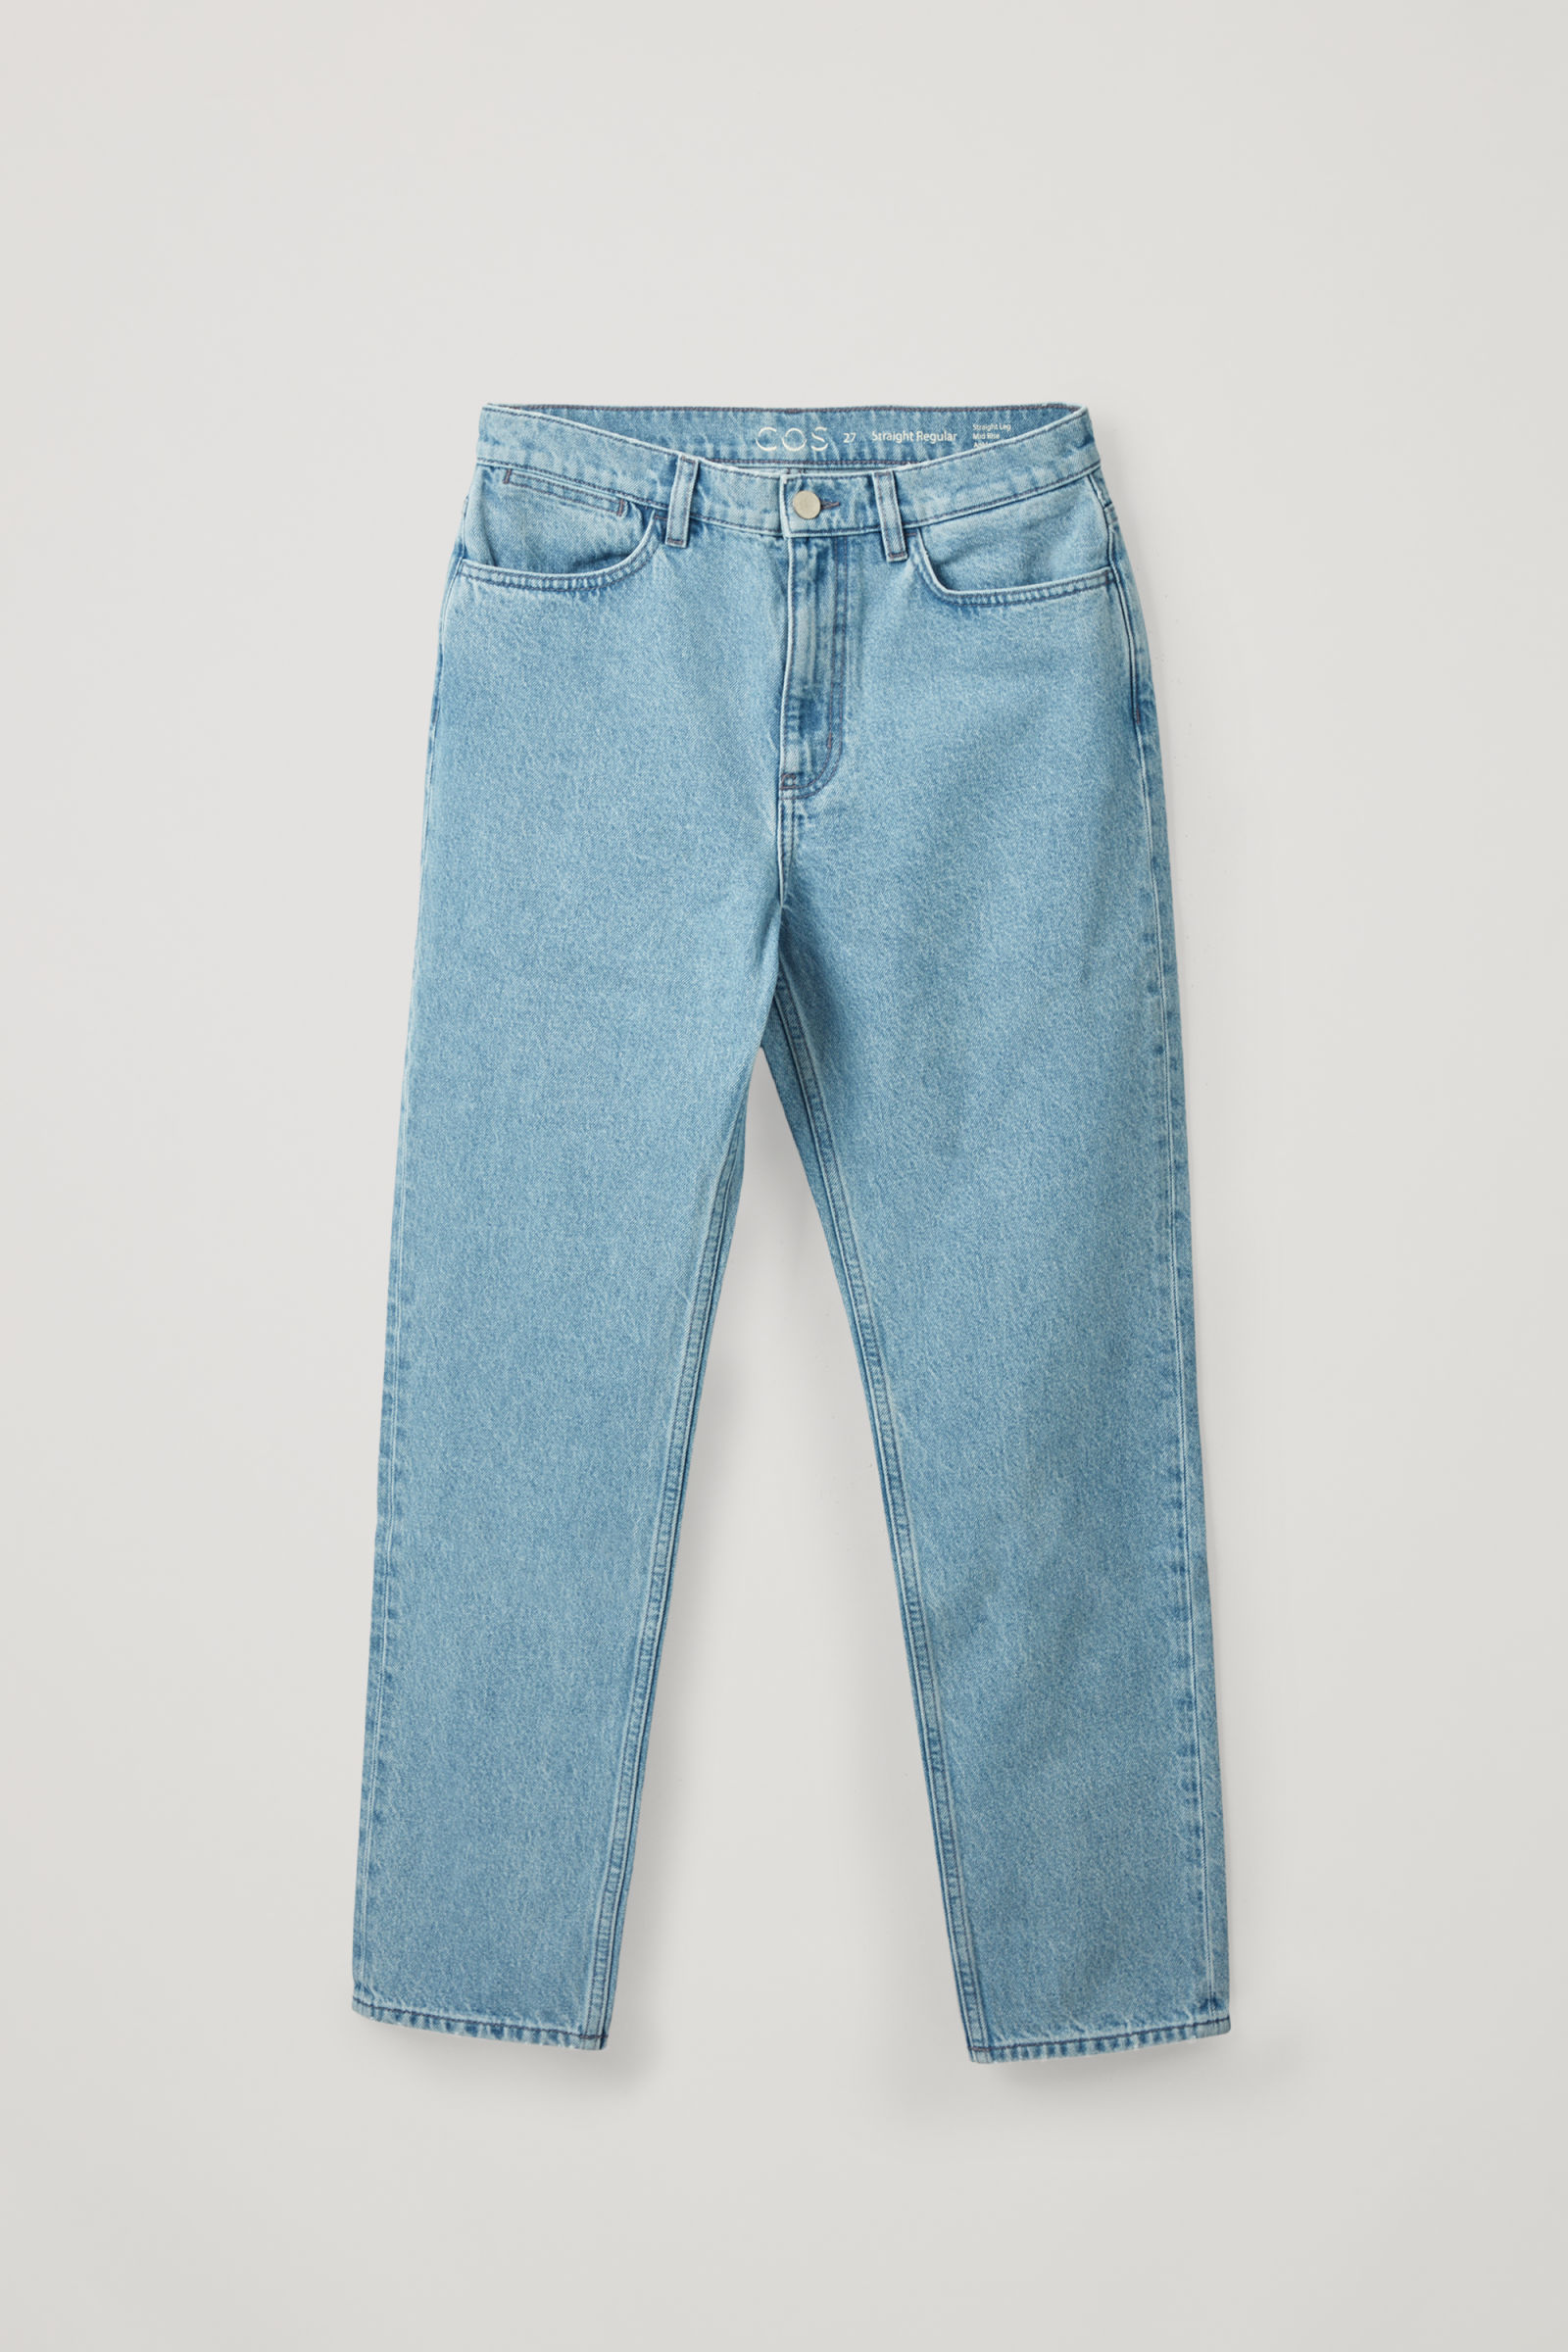 Shopping | The New Shape of Denim: Good-Bye Skinny Jeans